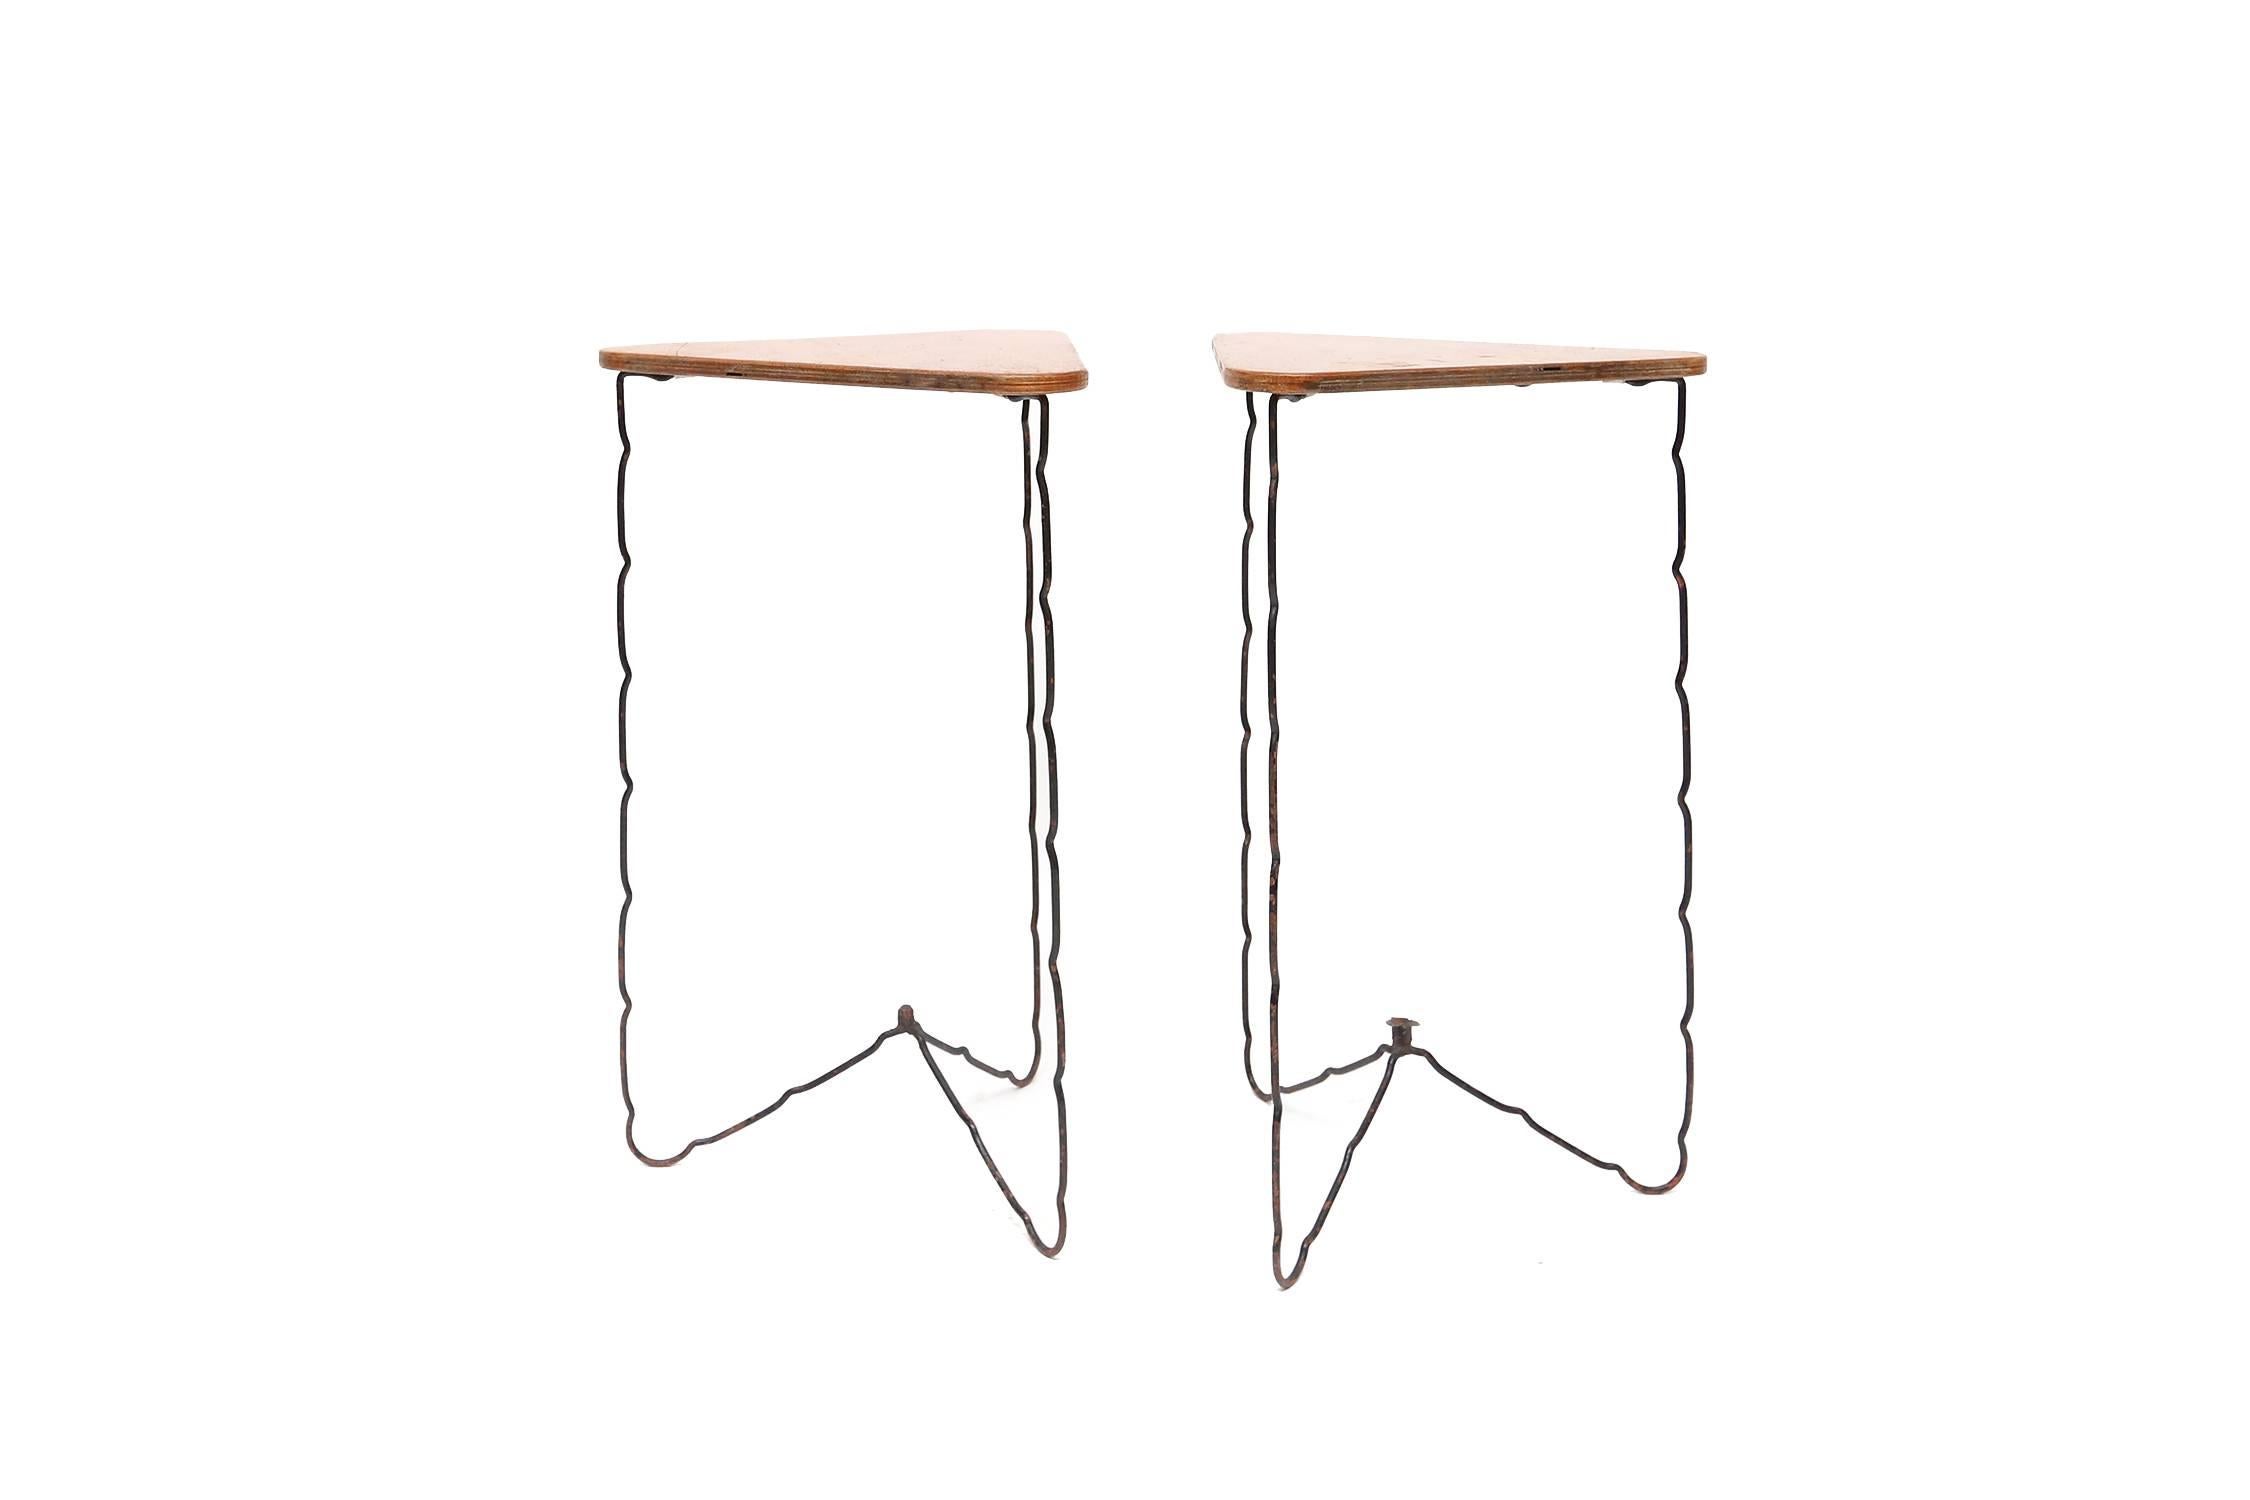 Vintage Mid-Century Modern pair of side tables
triangular multiplex seating
black metal frame.
France, 1950s.
Measures: H 51 cm Ø 33 cm.
    
   